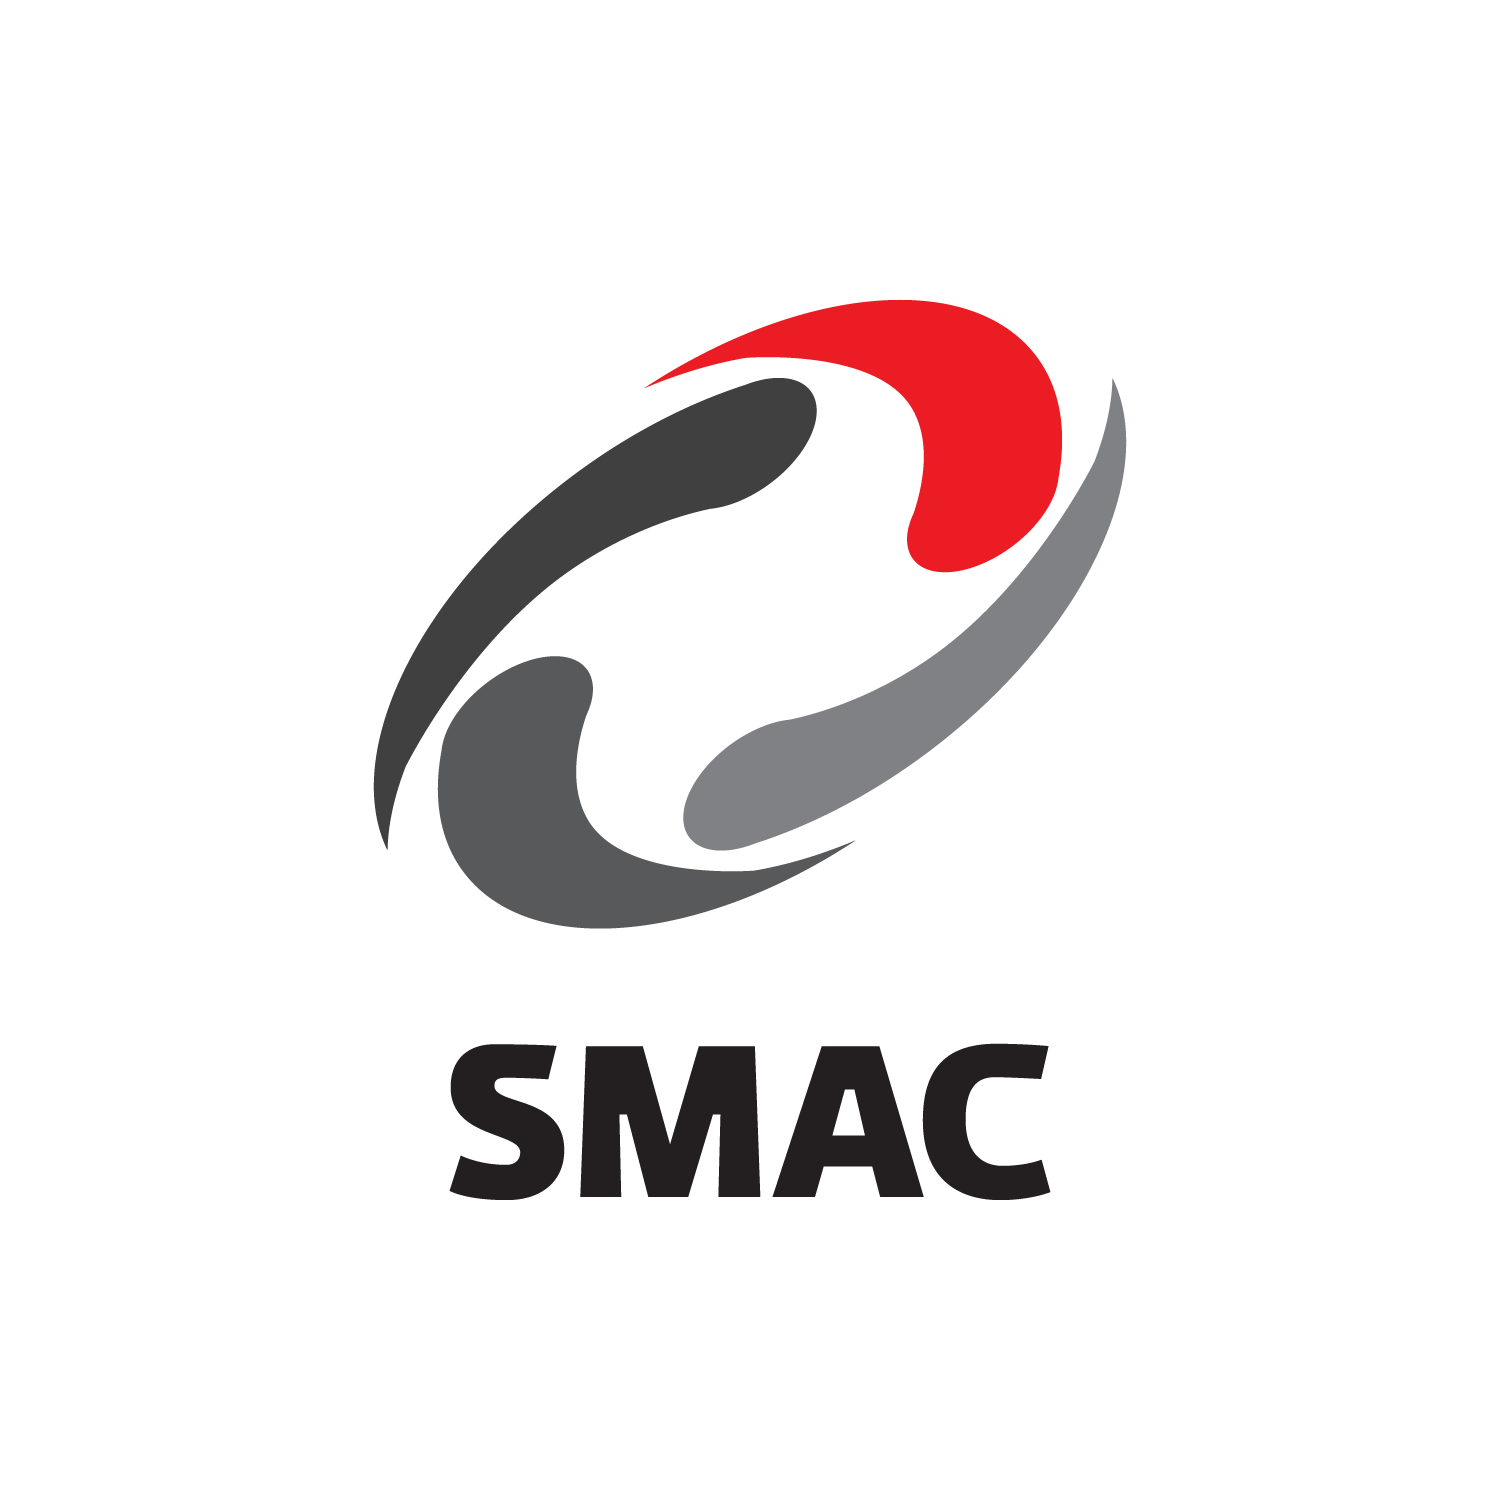 SMAC- Sunada & Matsuura Company